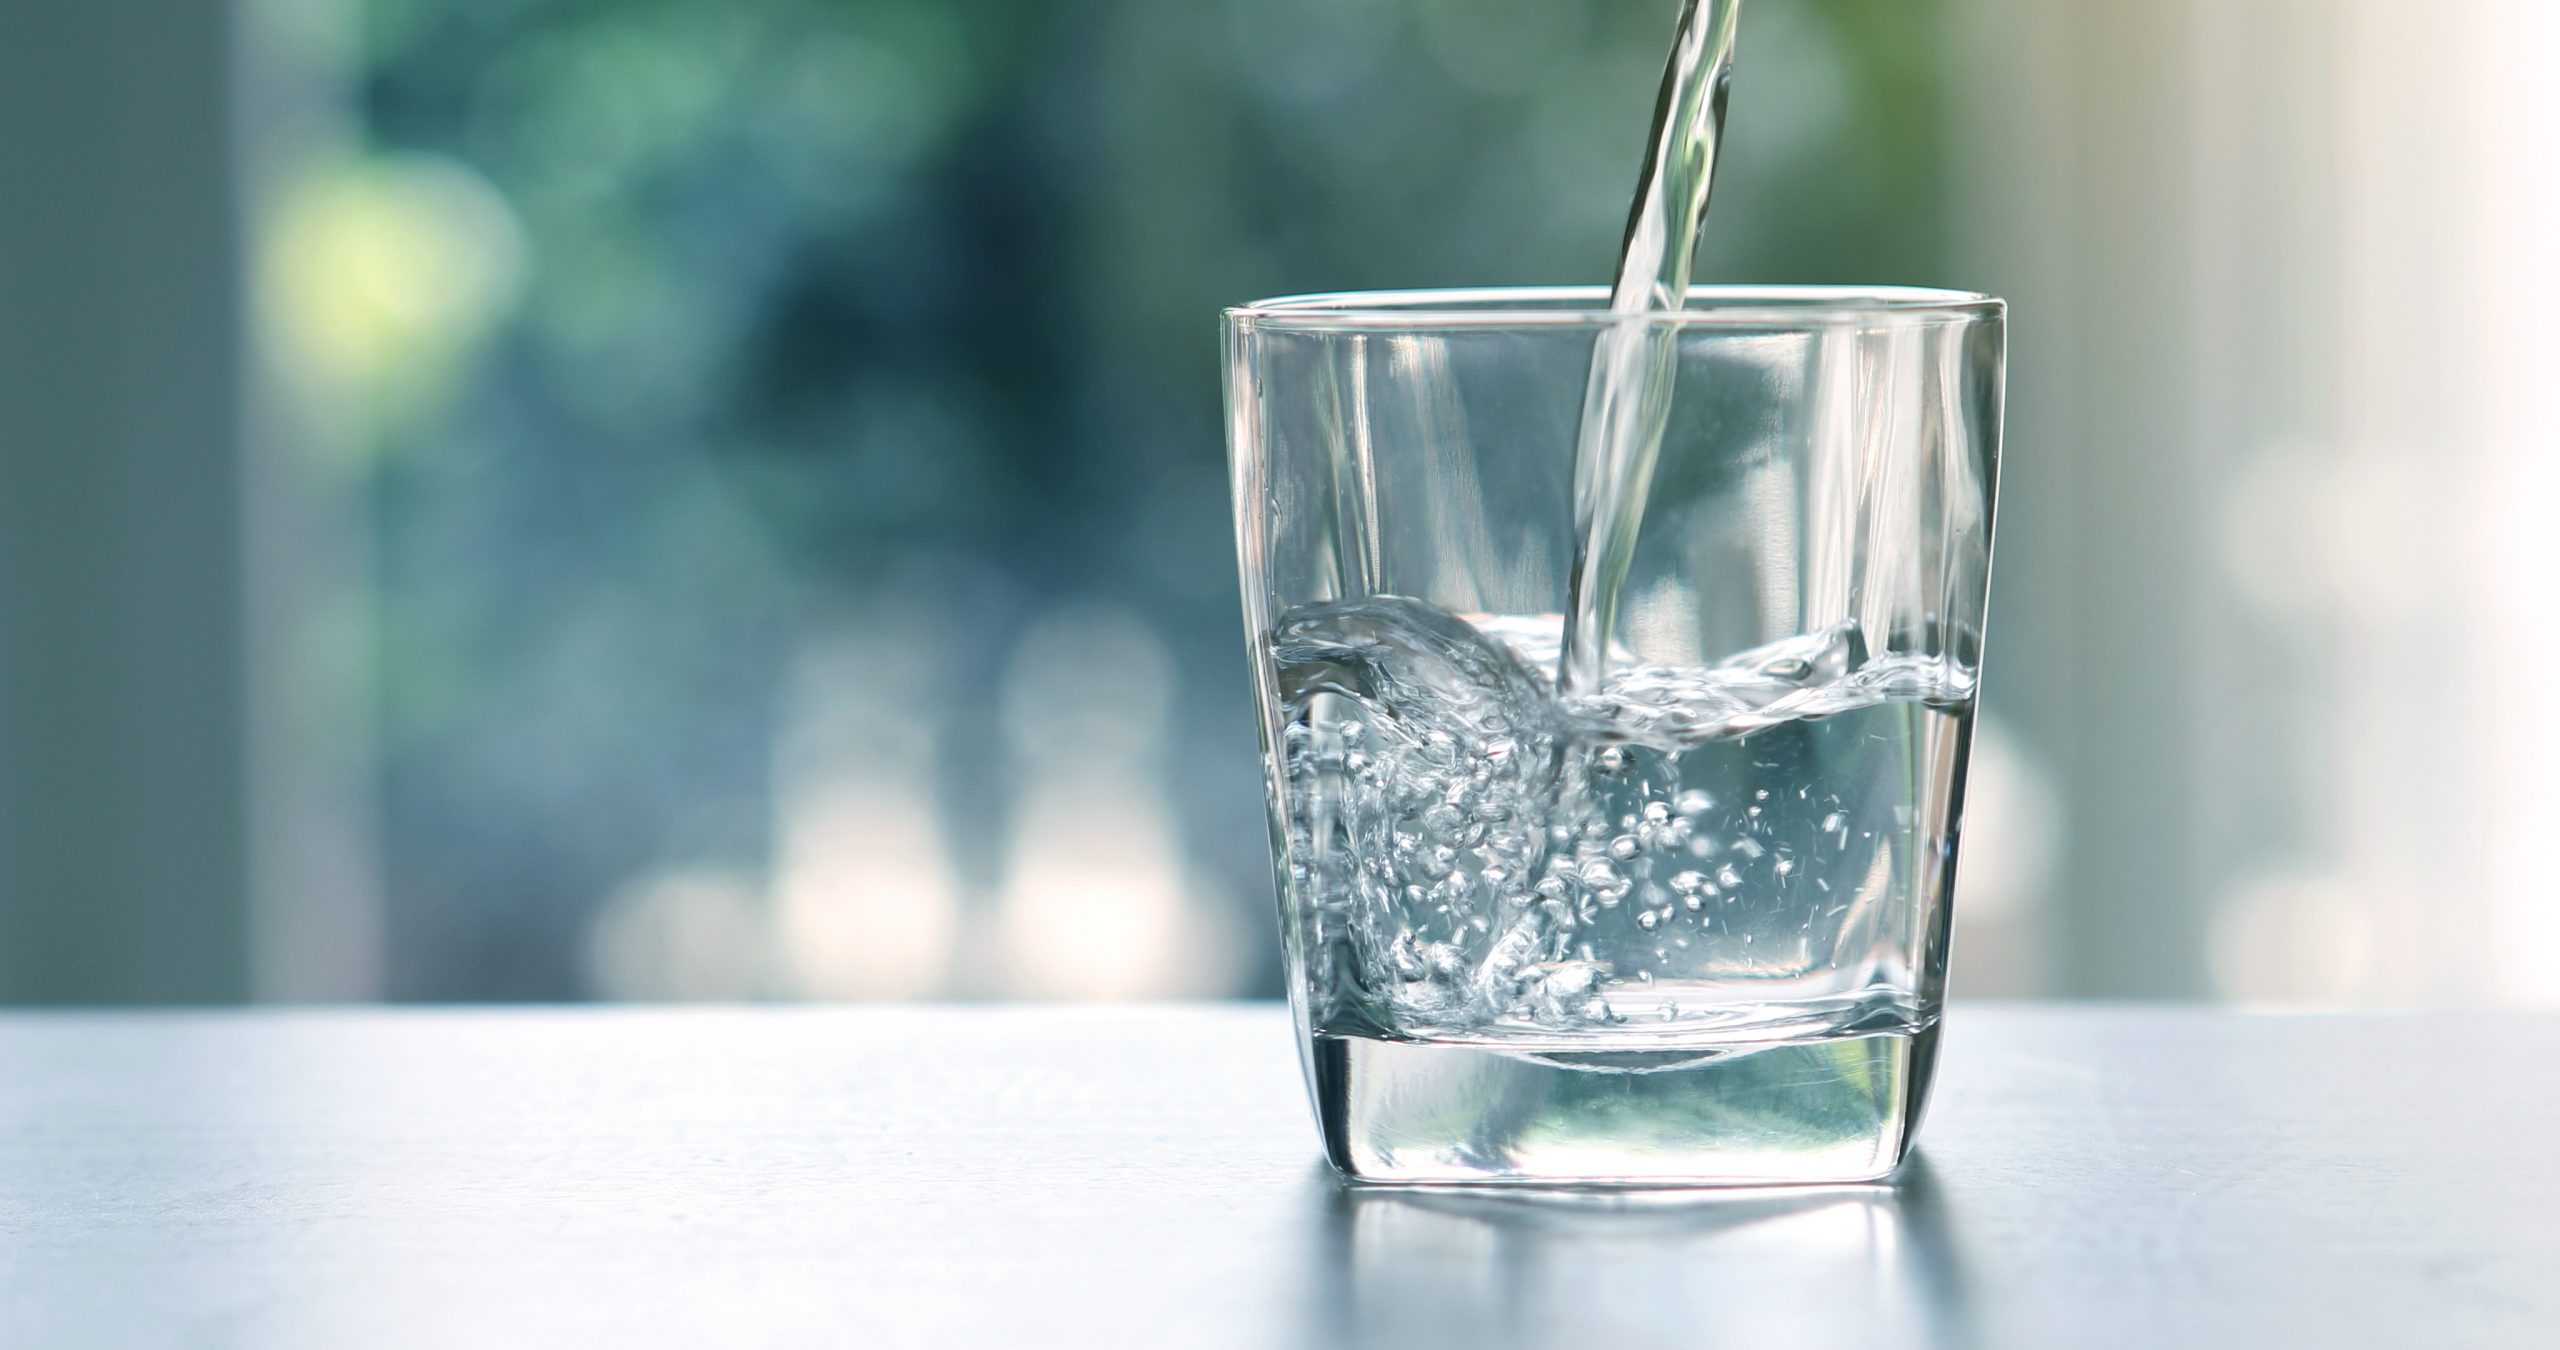 Pennsylvania PFAS drinking water standards